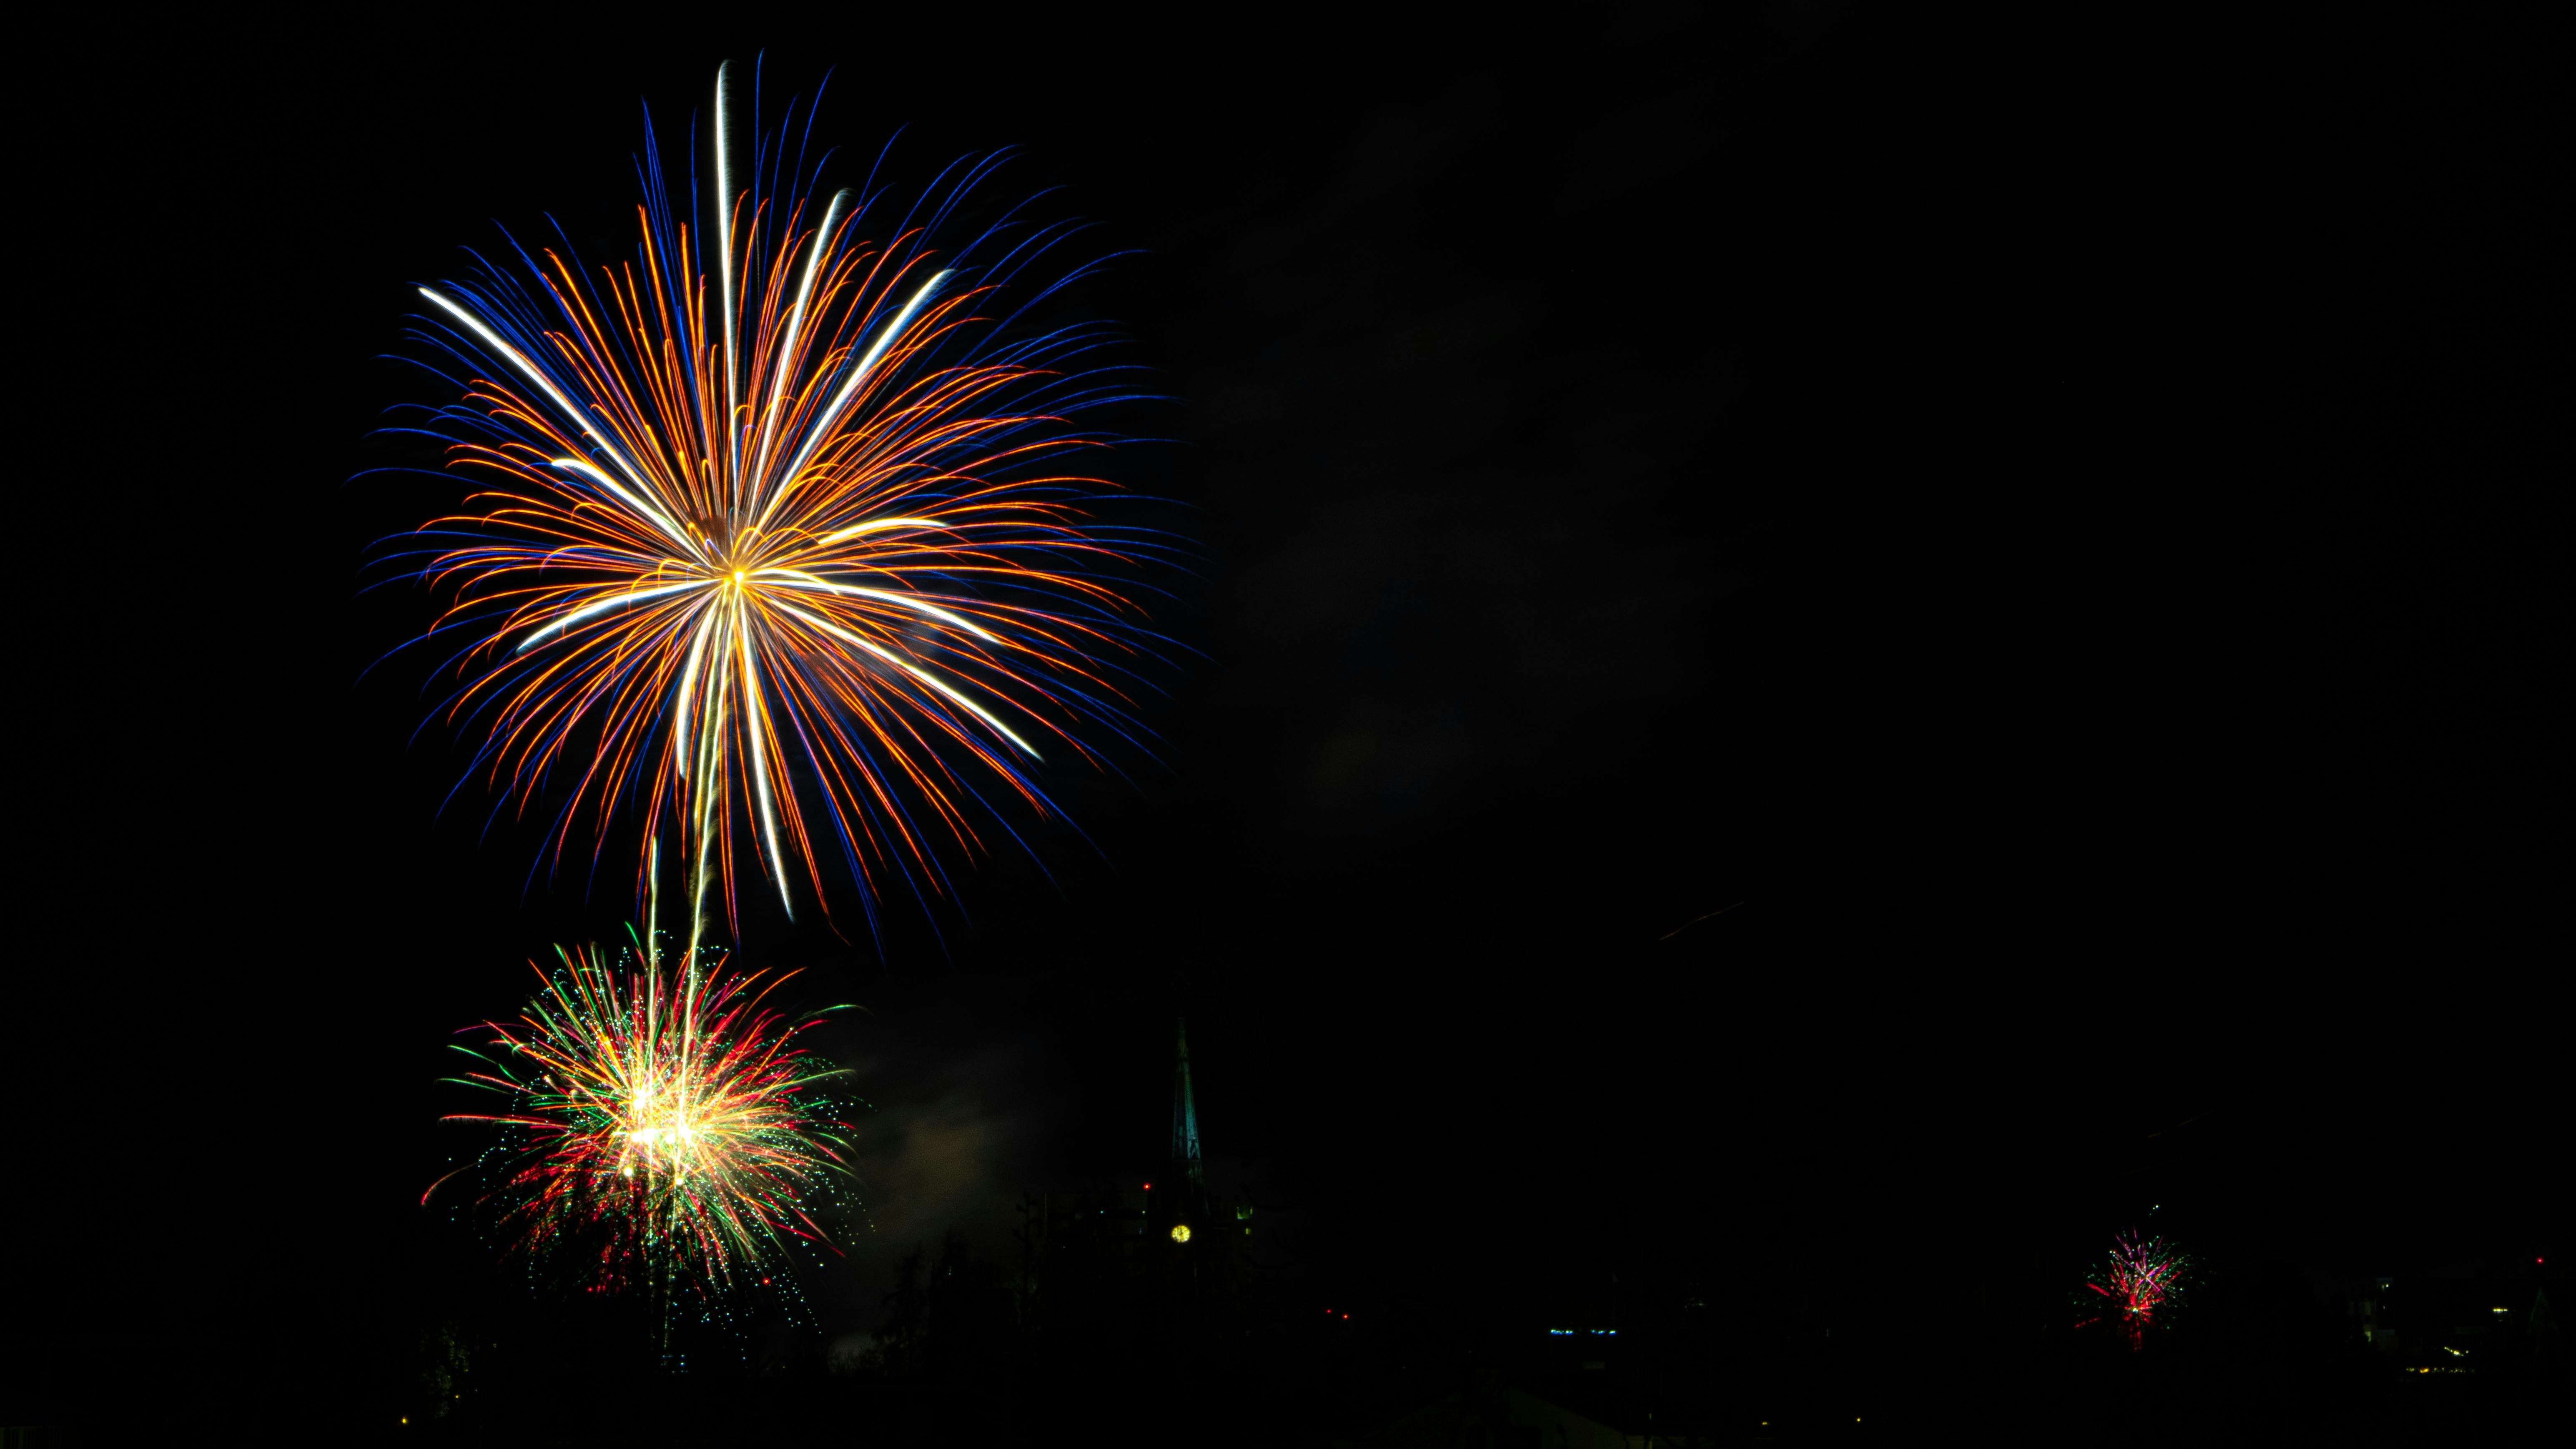 Fireworks Display At Night · Free Stock Photo